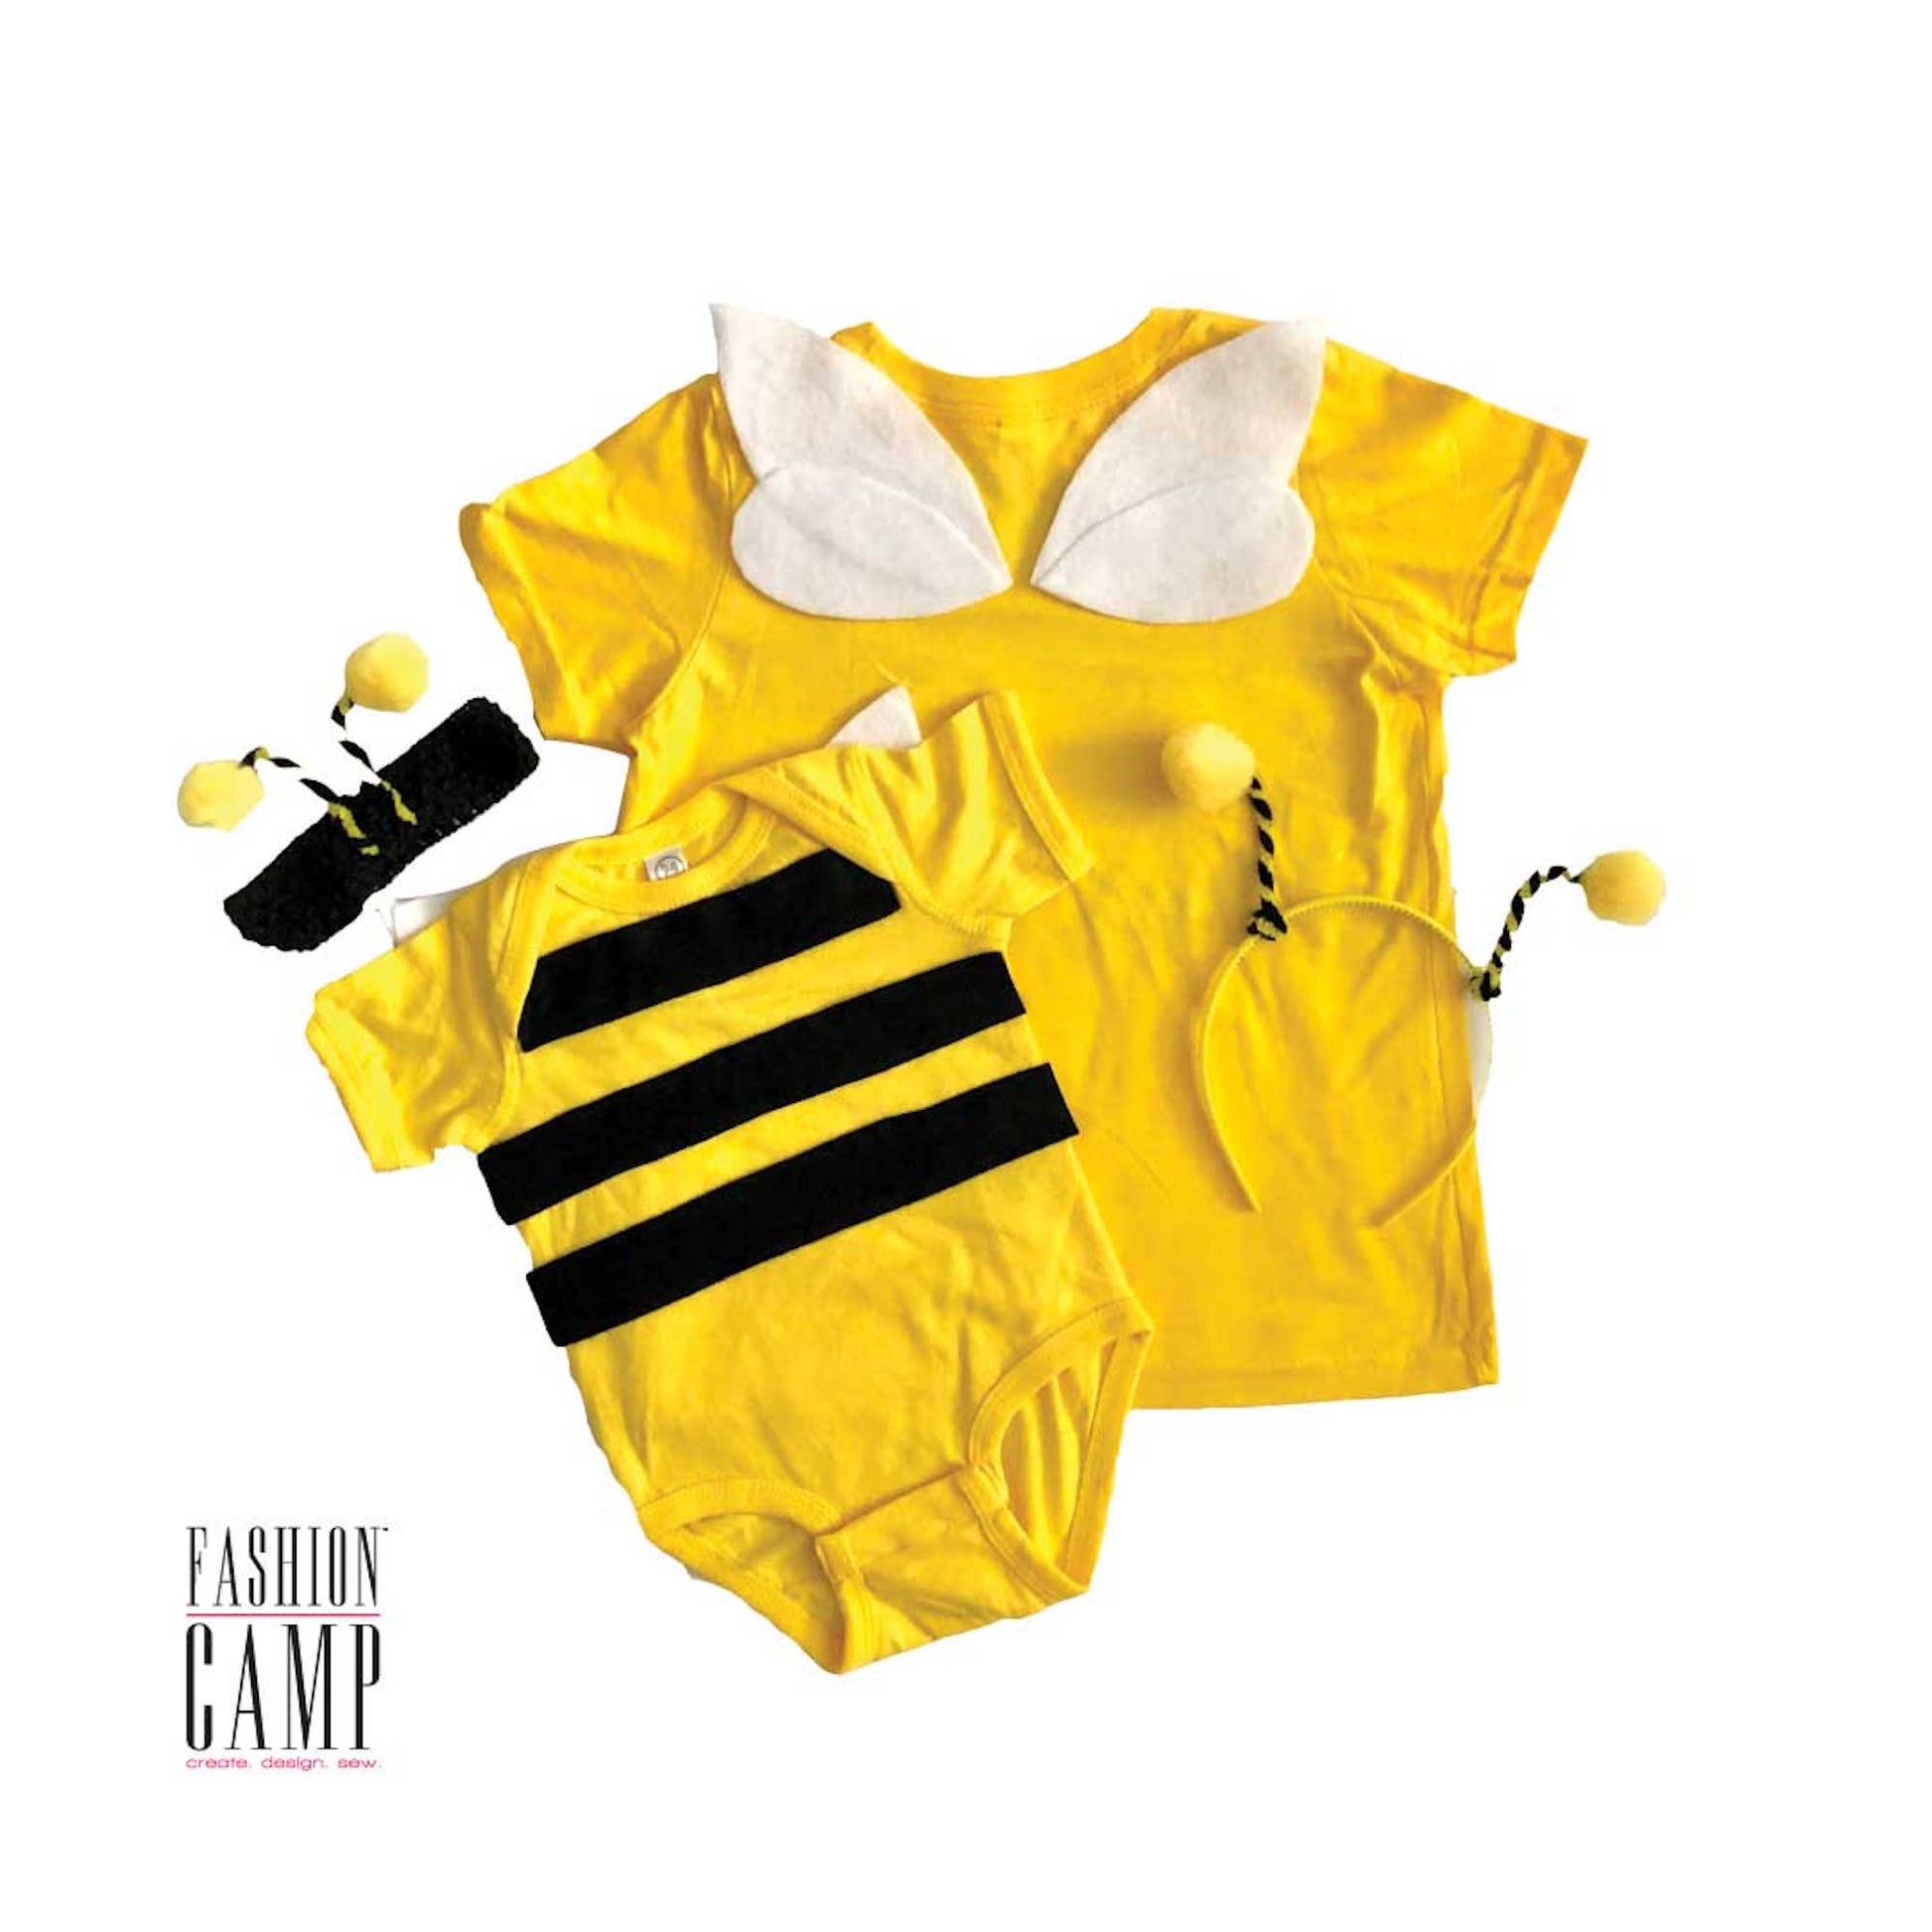 DIY Tutu and Tee Costume Kit  Bumble Bee Costume – Fashion Camp